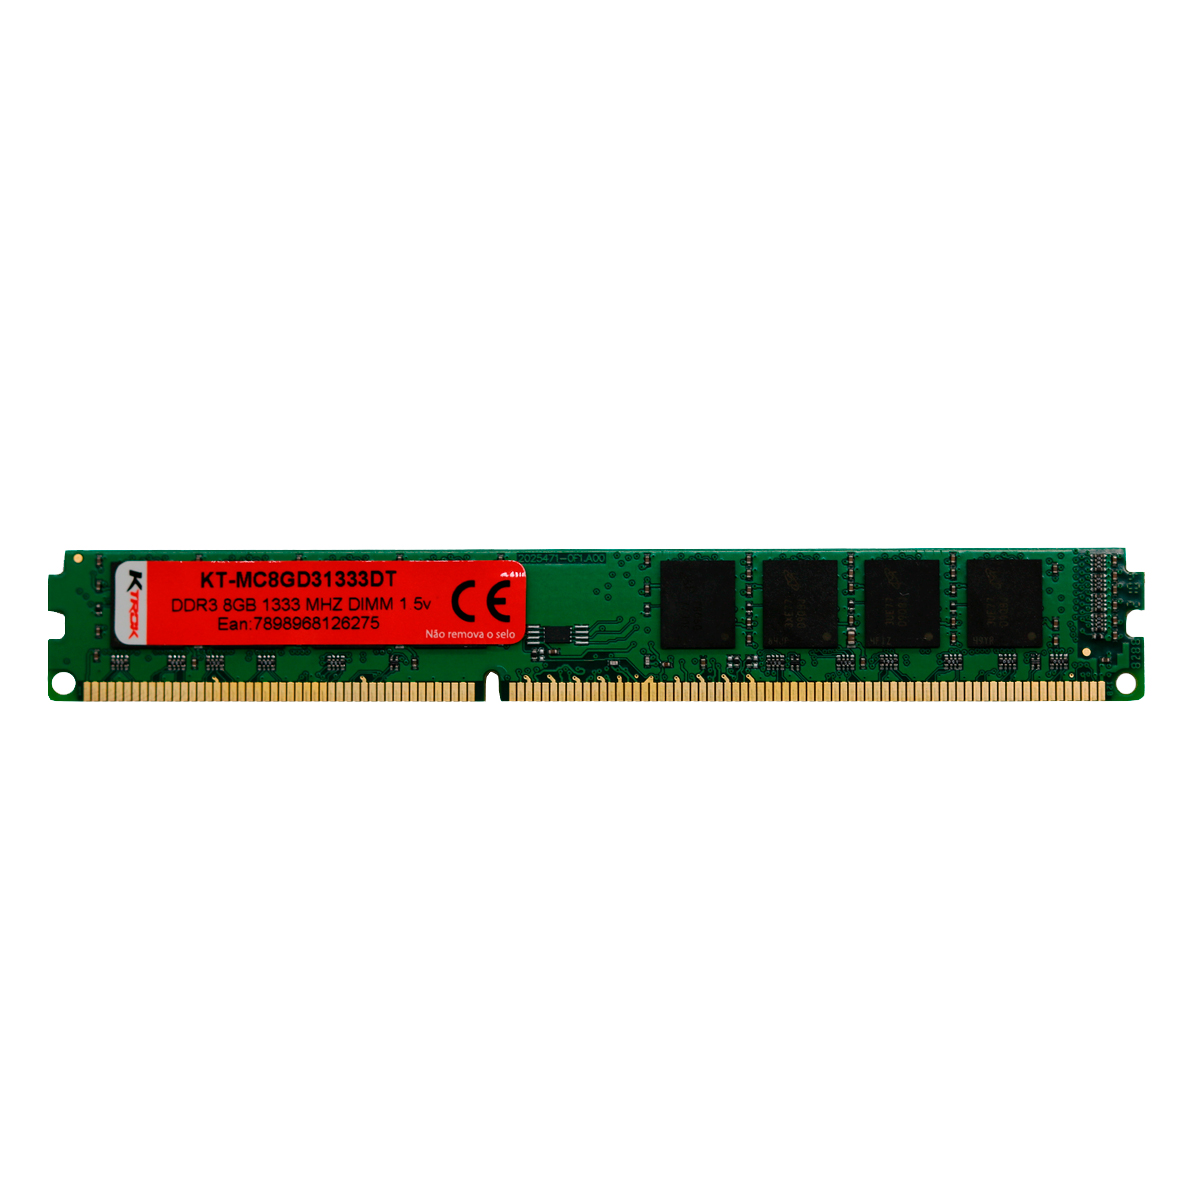 Memória 8GB DDR3 1600MHz Ktrok - KT-MC8GD31600DT